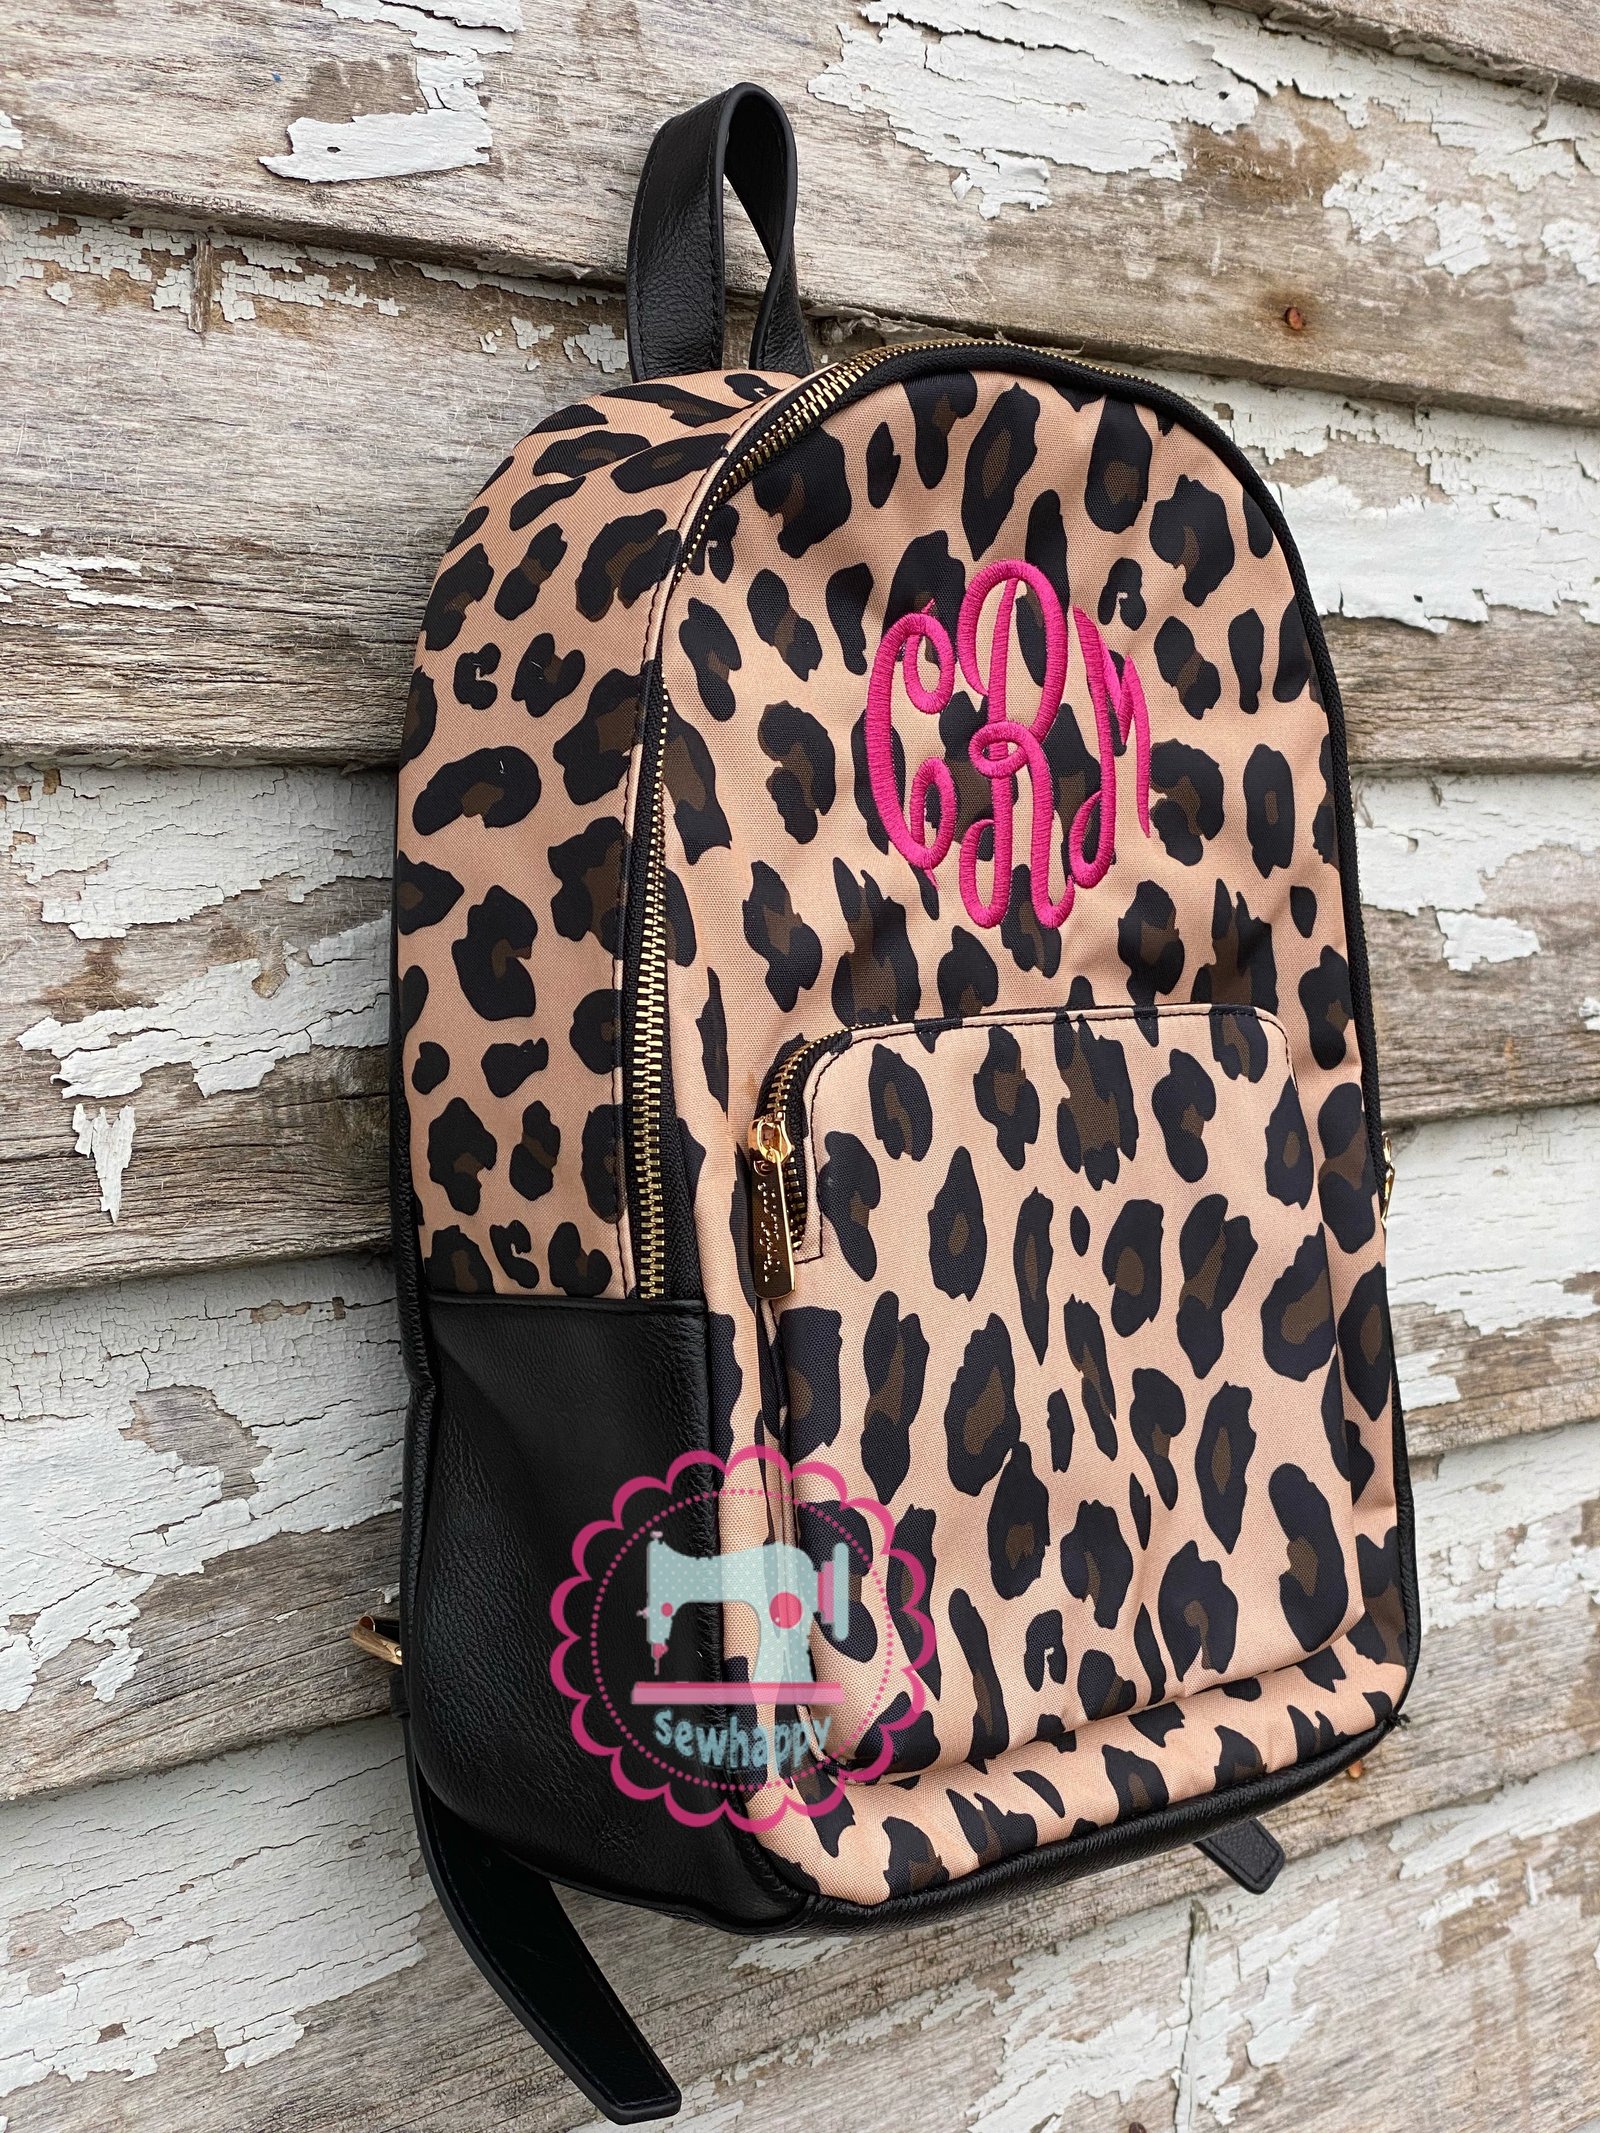 Monogrammed Backpack Black Nylon/spotted/leopard/camo 